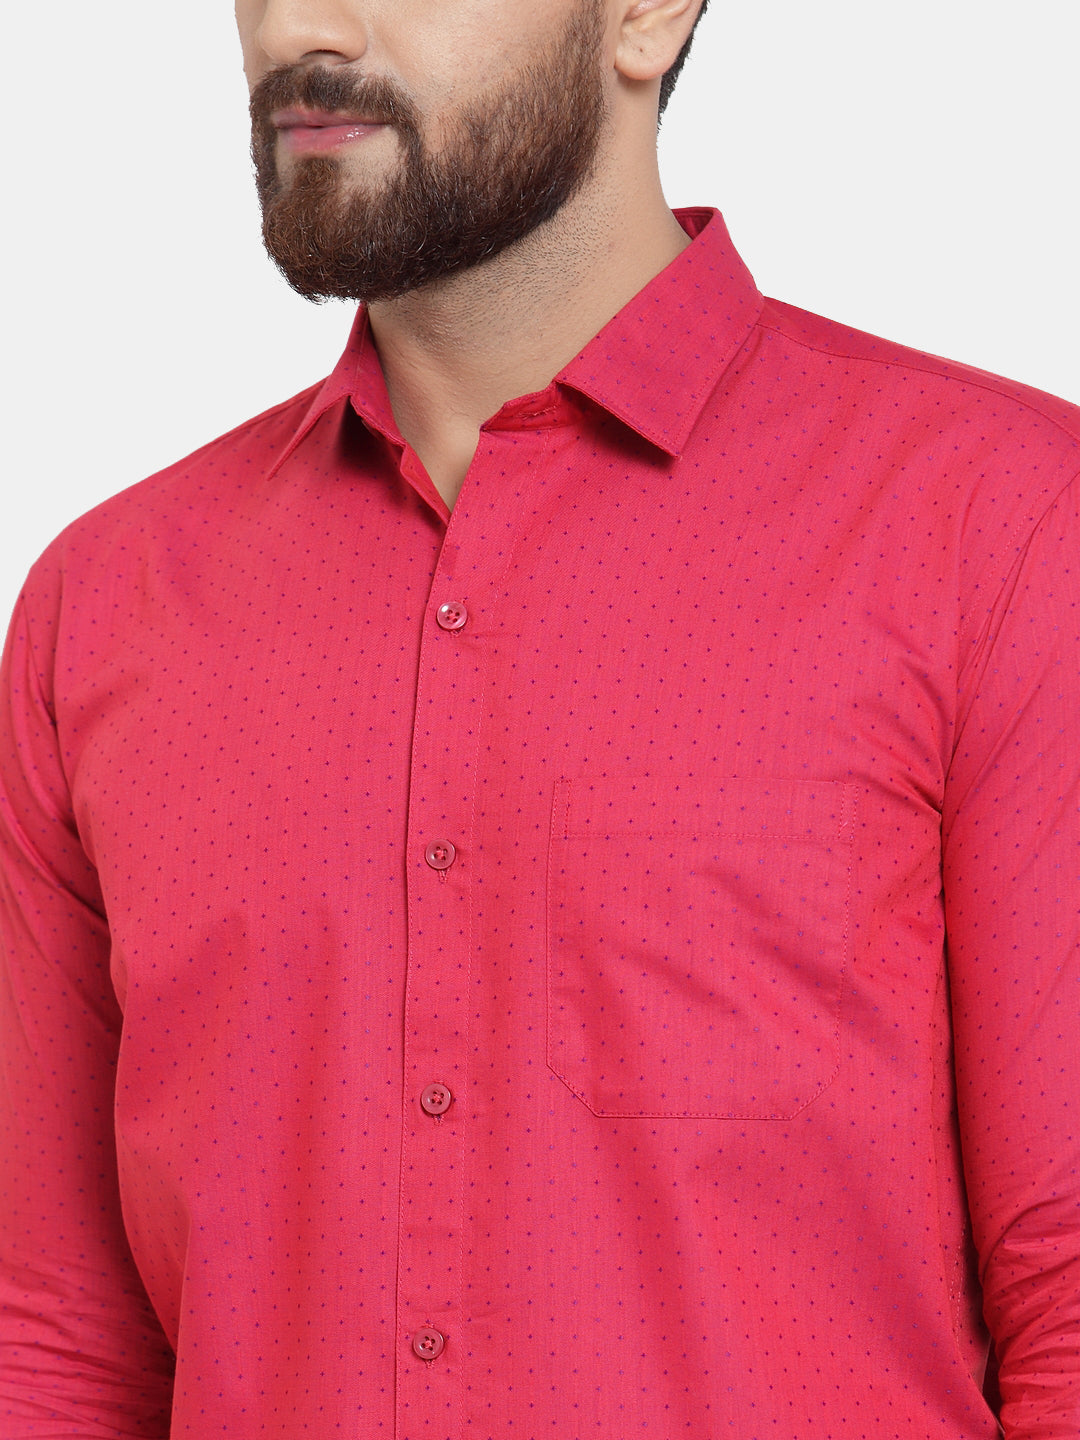 Men's Red Cotton Polka Dots Formal Shirts ( SF 739Red ) - Jainish